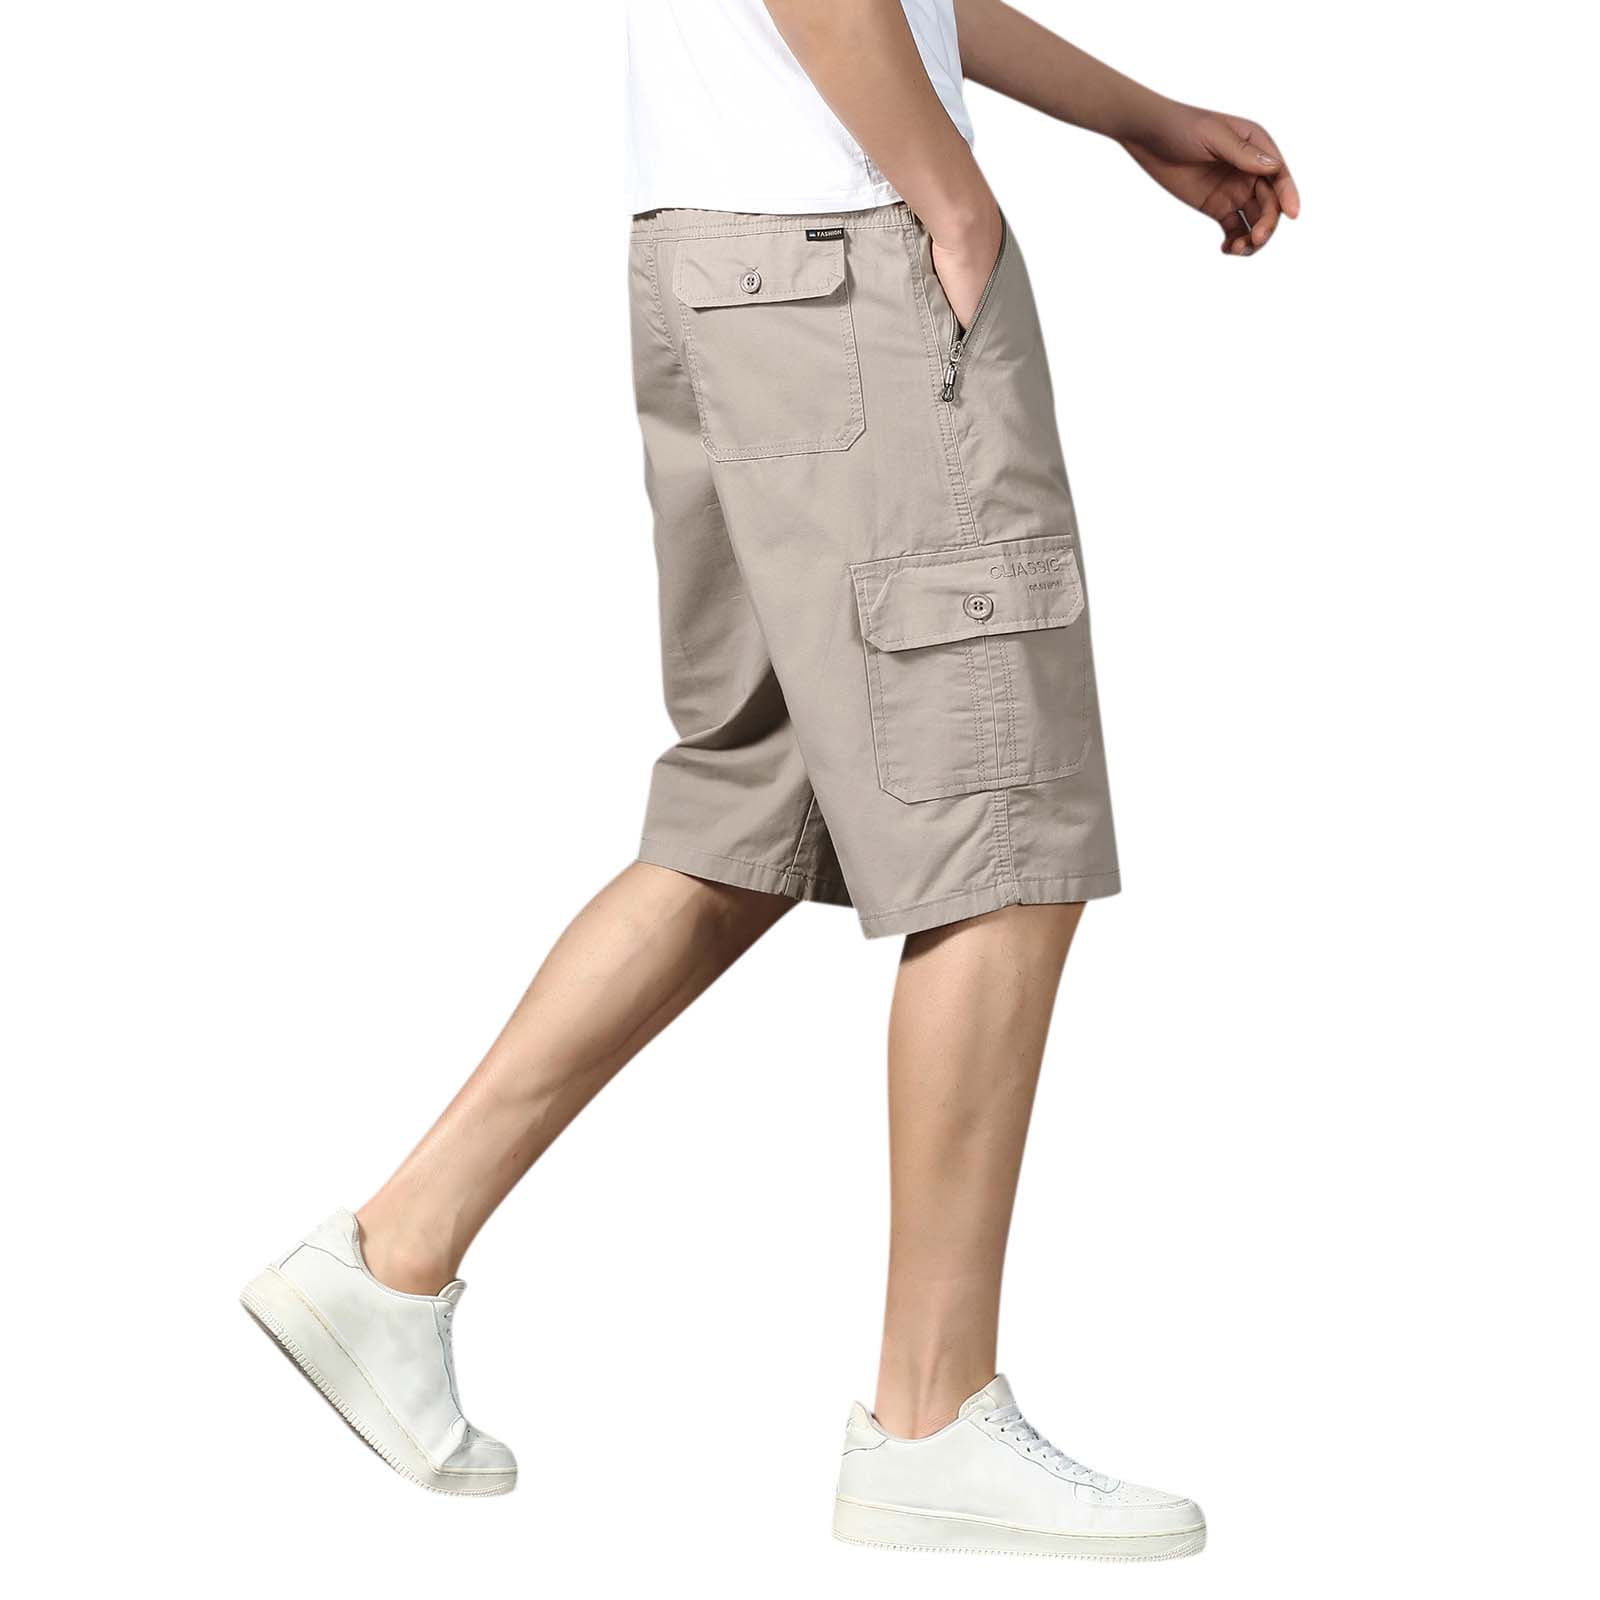 Elliotts Navy 3/4 Elastic Waist Cargo Shorts - Lowes Menswear